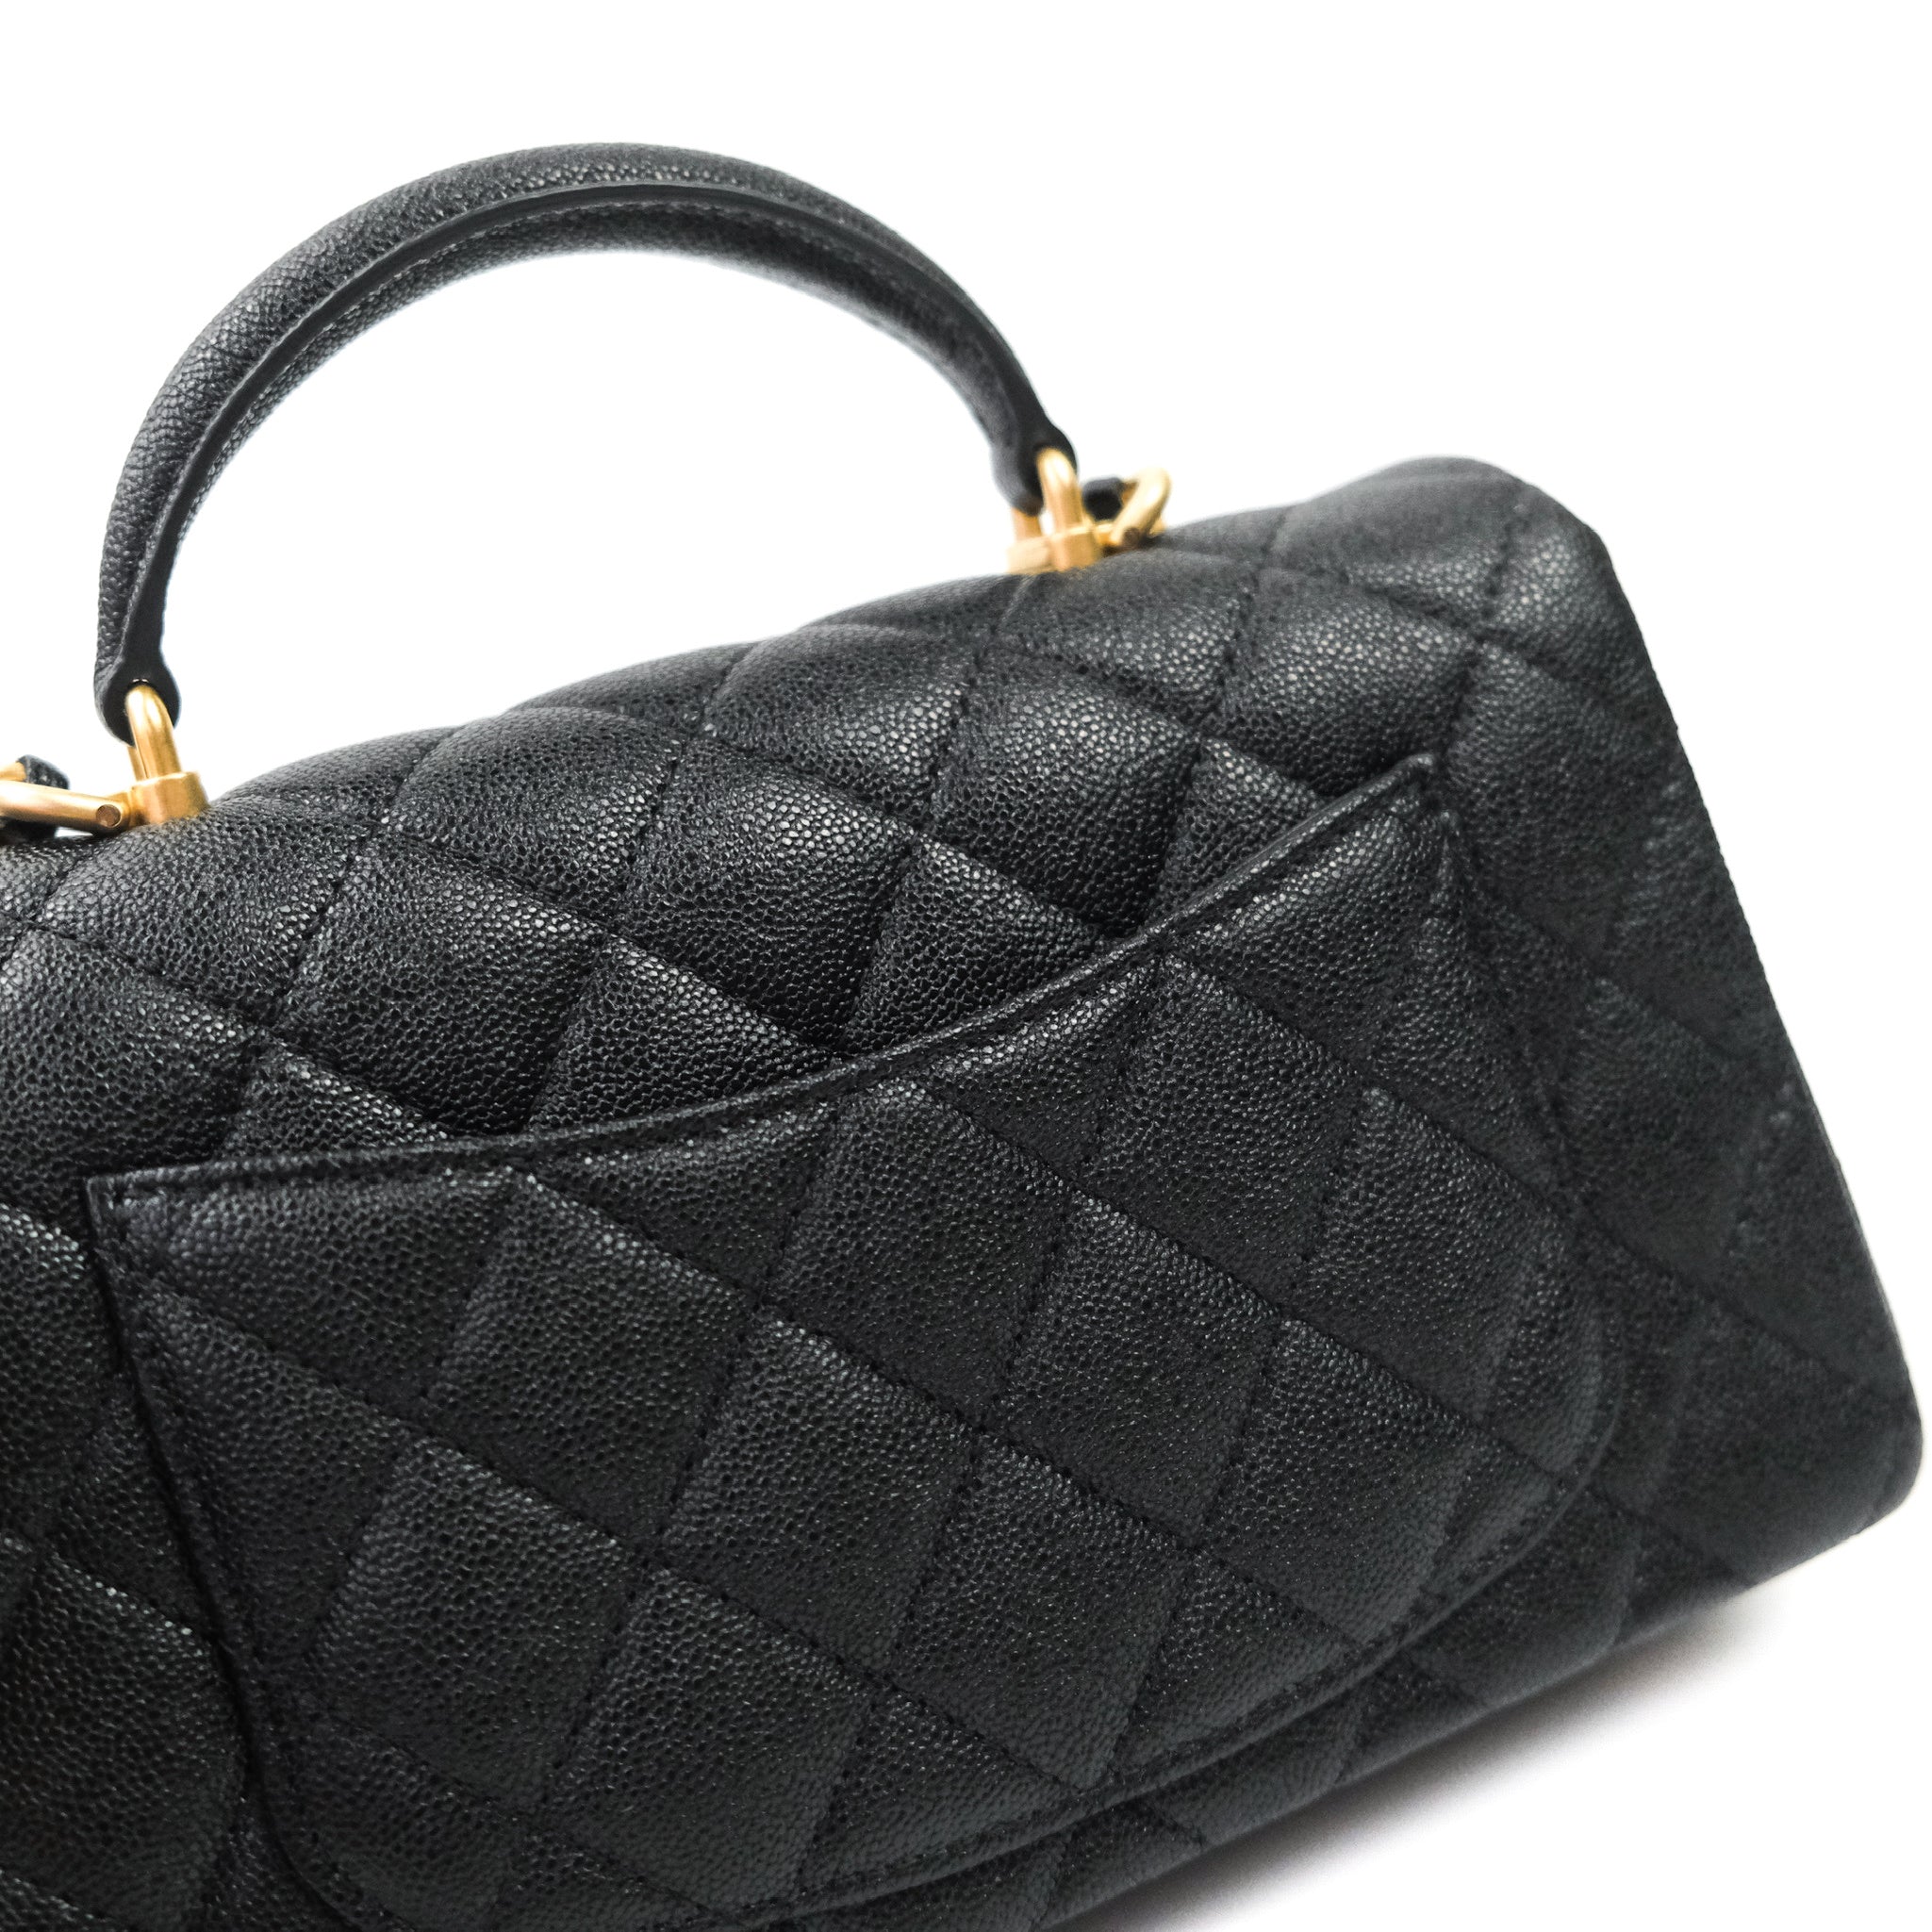 Chanel Vintage Rectangle Mini Bag – Beccas Bags